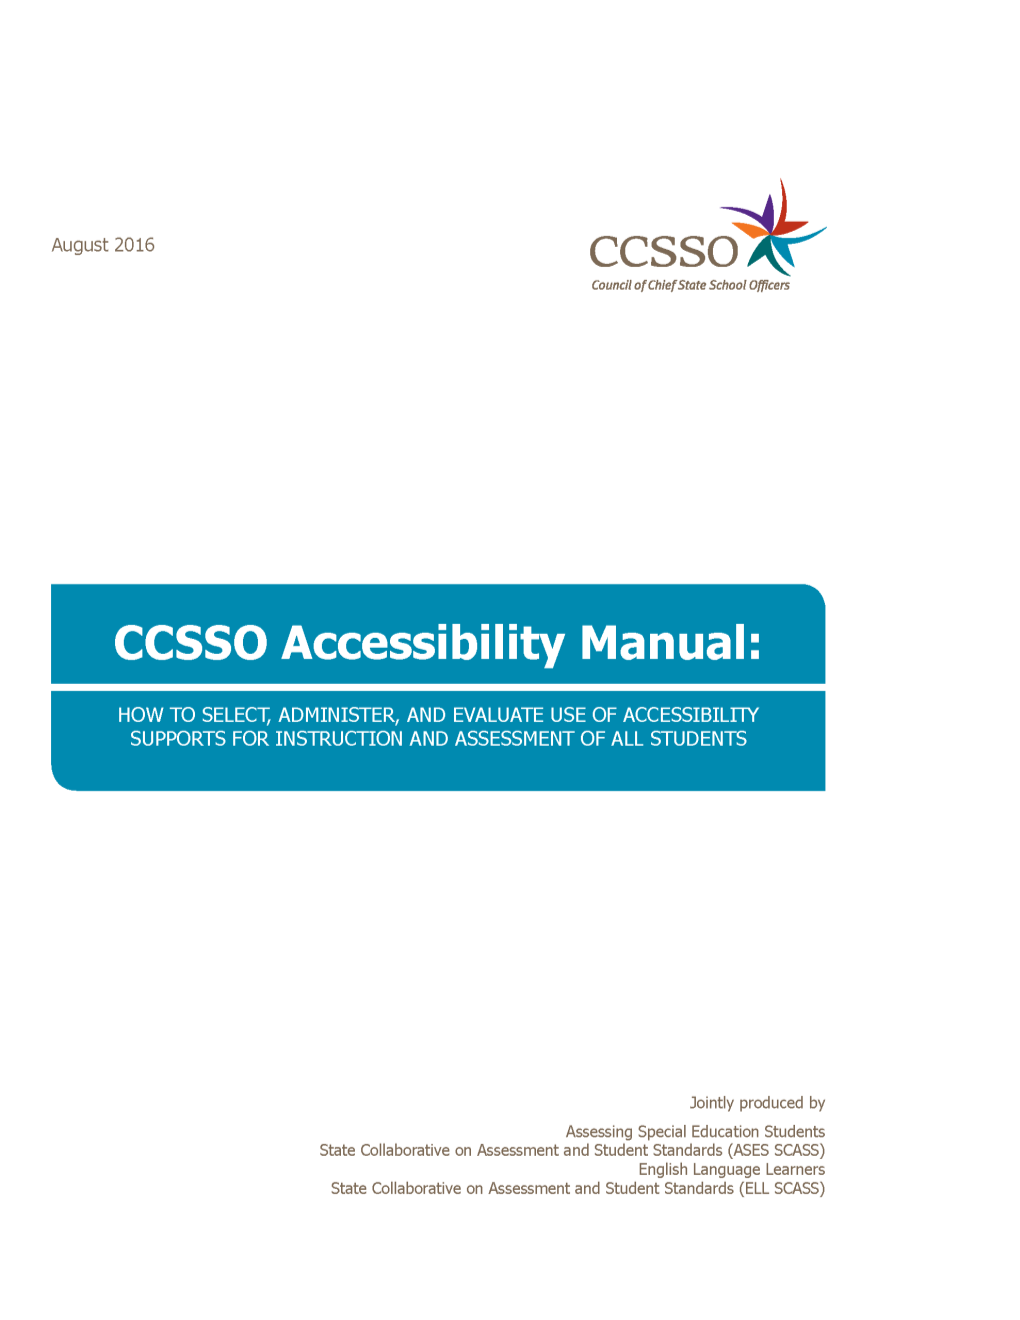 CCSSO Accessibility Manual